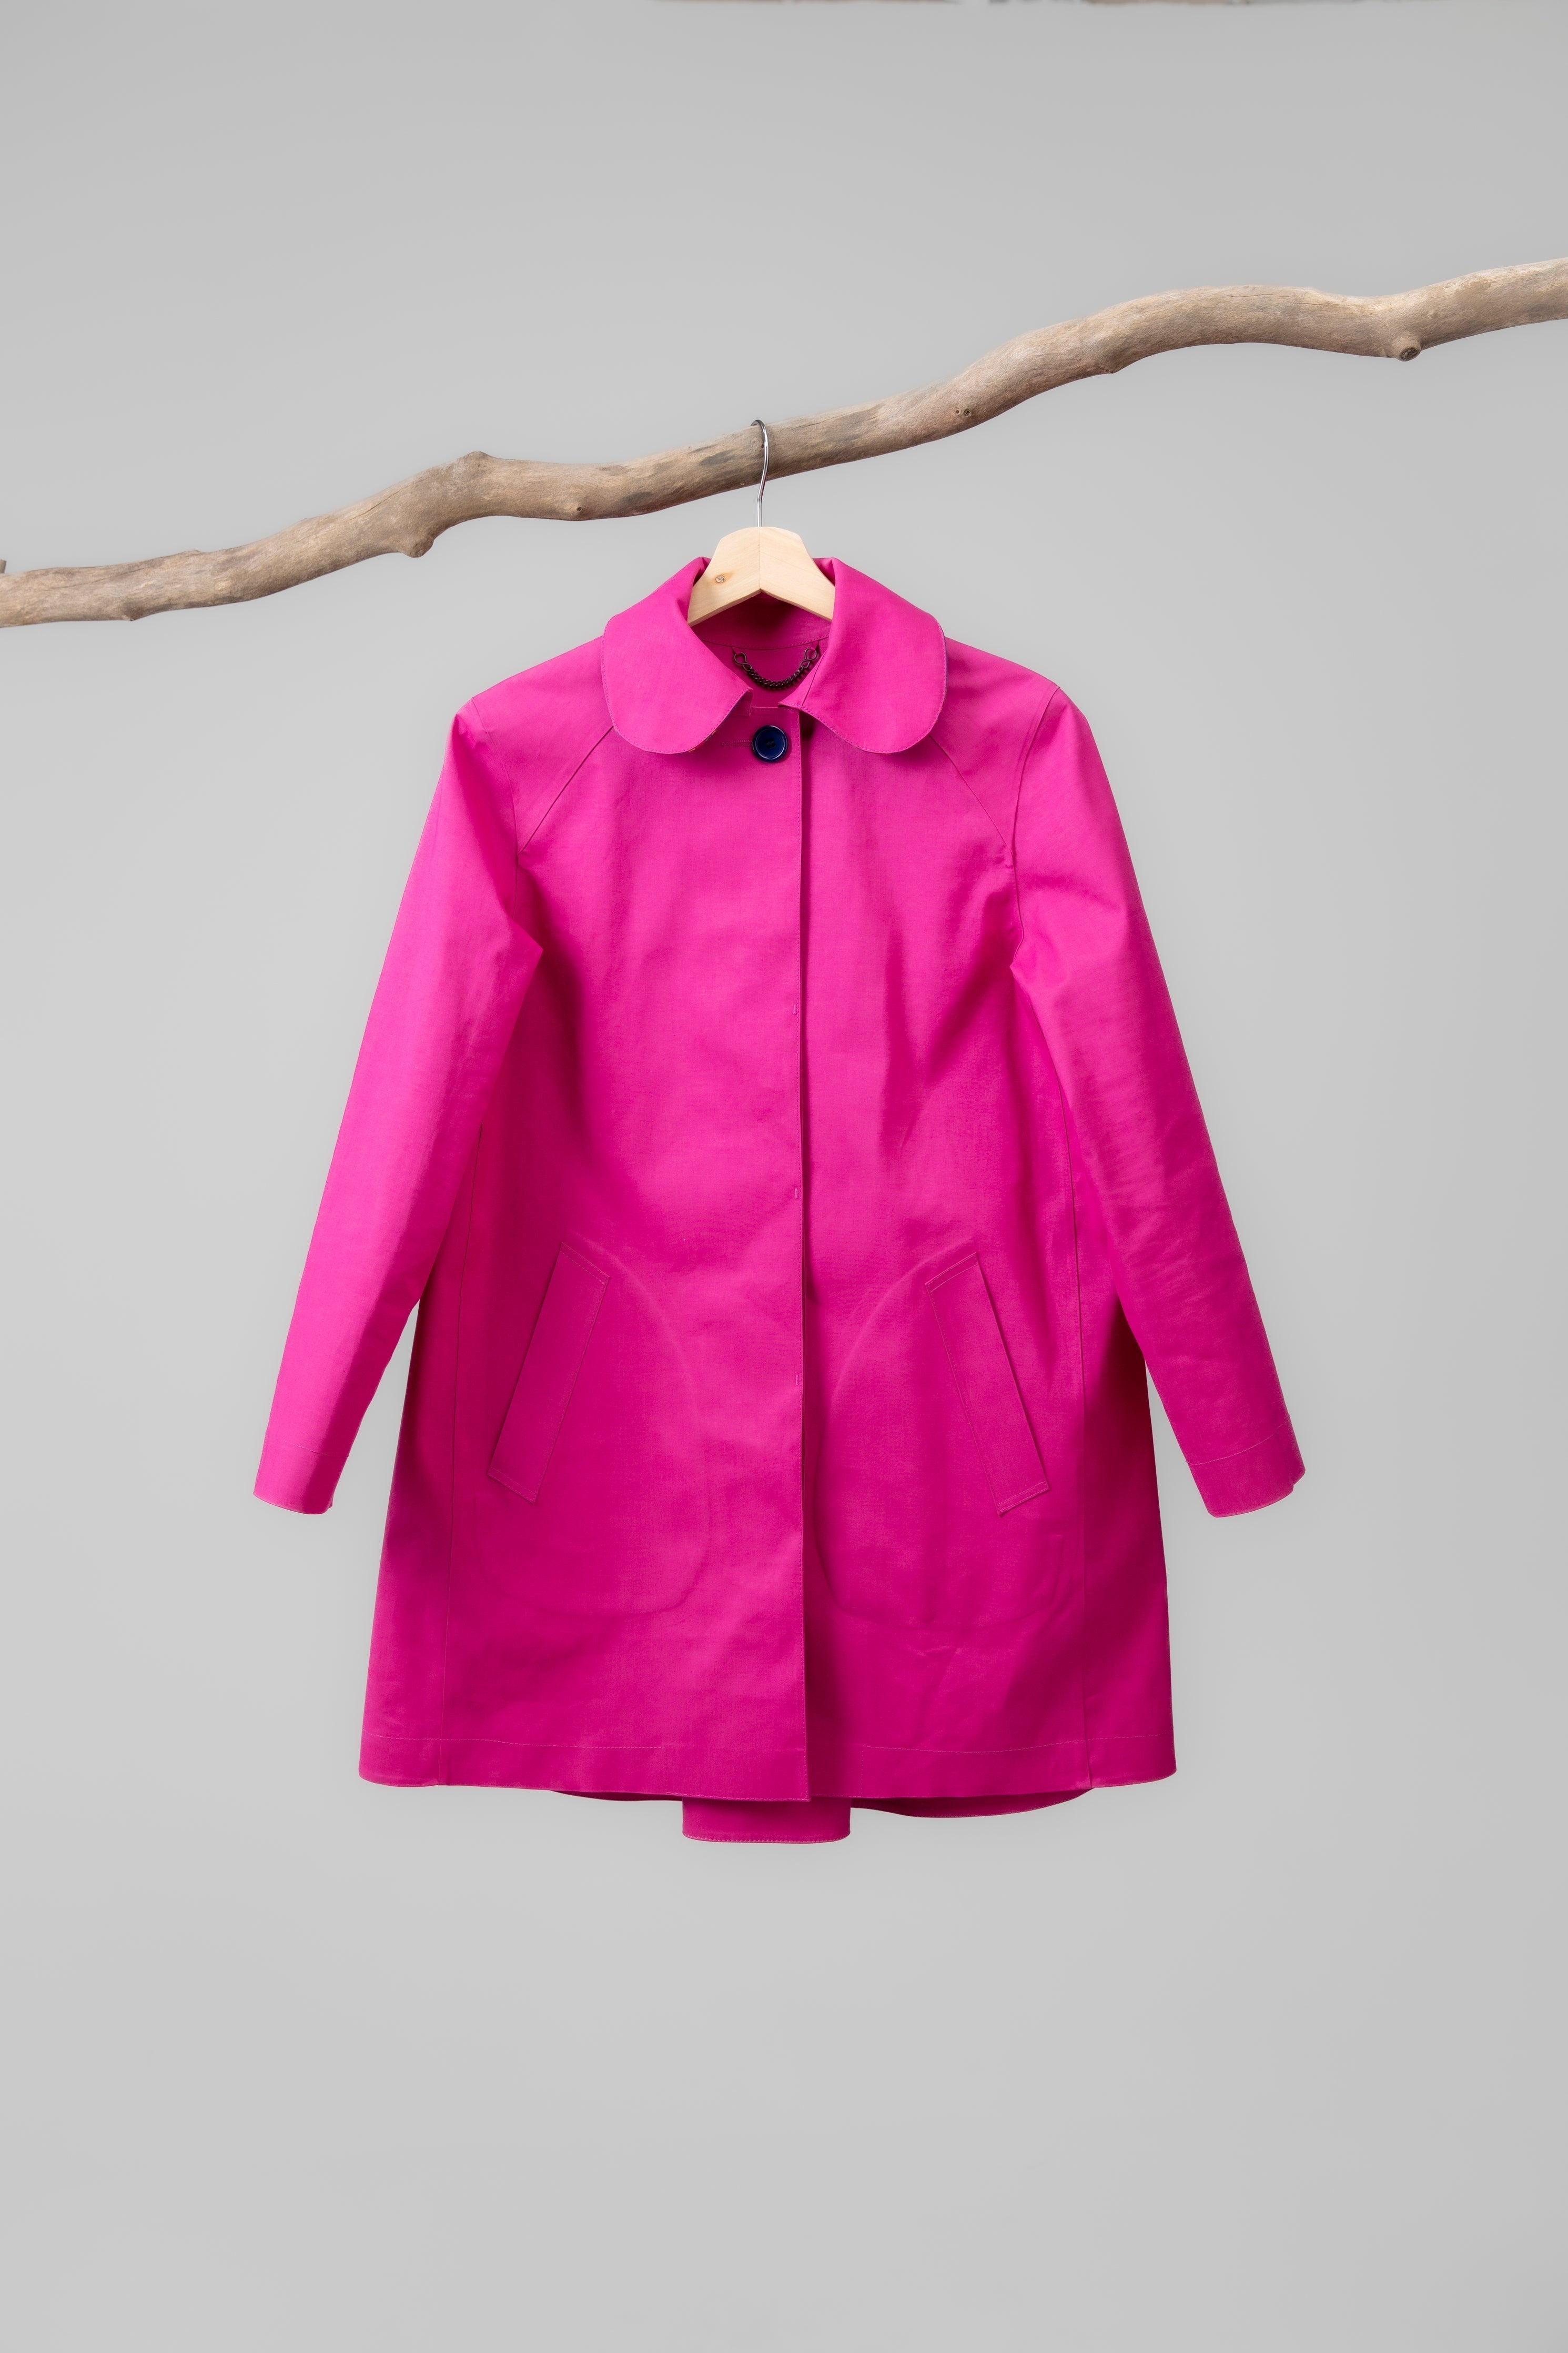 Article 9 pea coat - pink Tailored Coats HANCOCK OF SCOTLAND